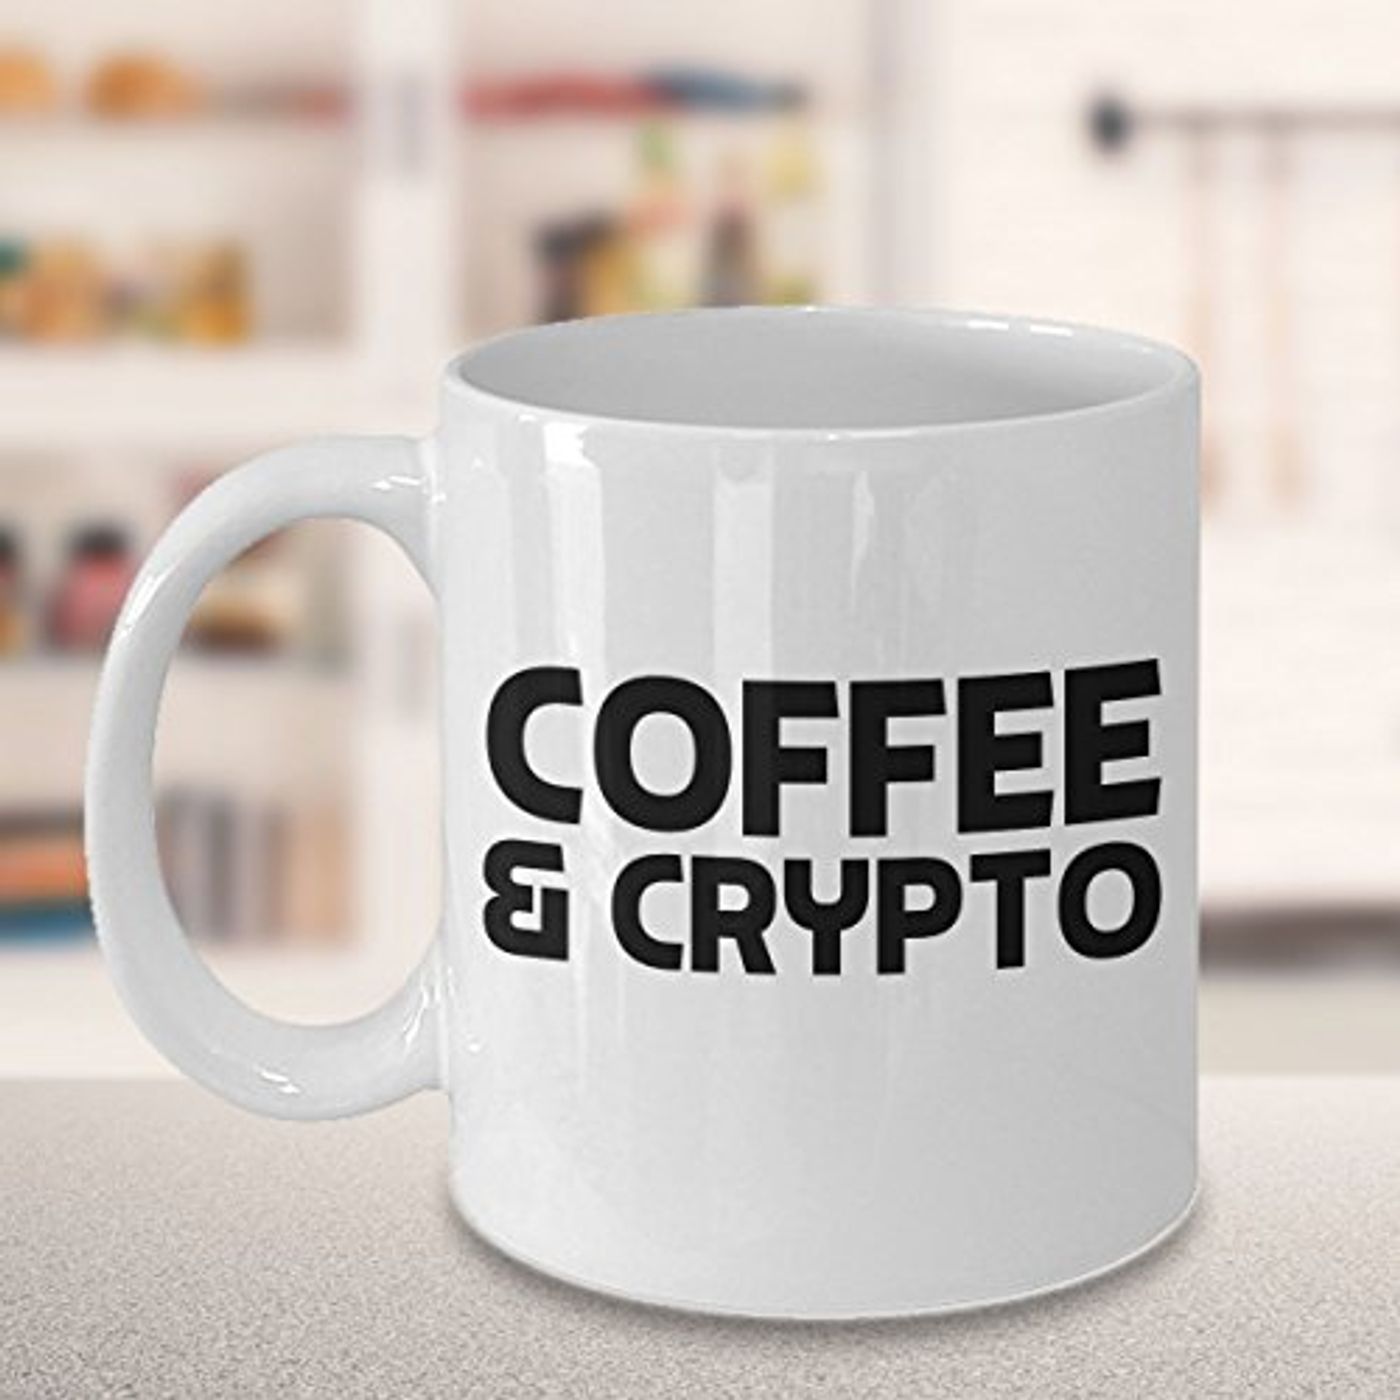 CoffeeTalk.co -Let's Talk Crypto! PRN.fm